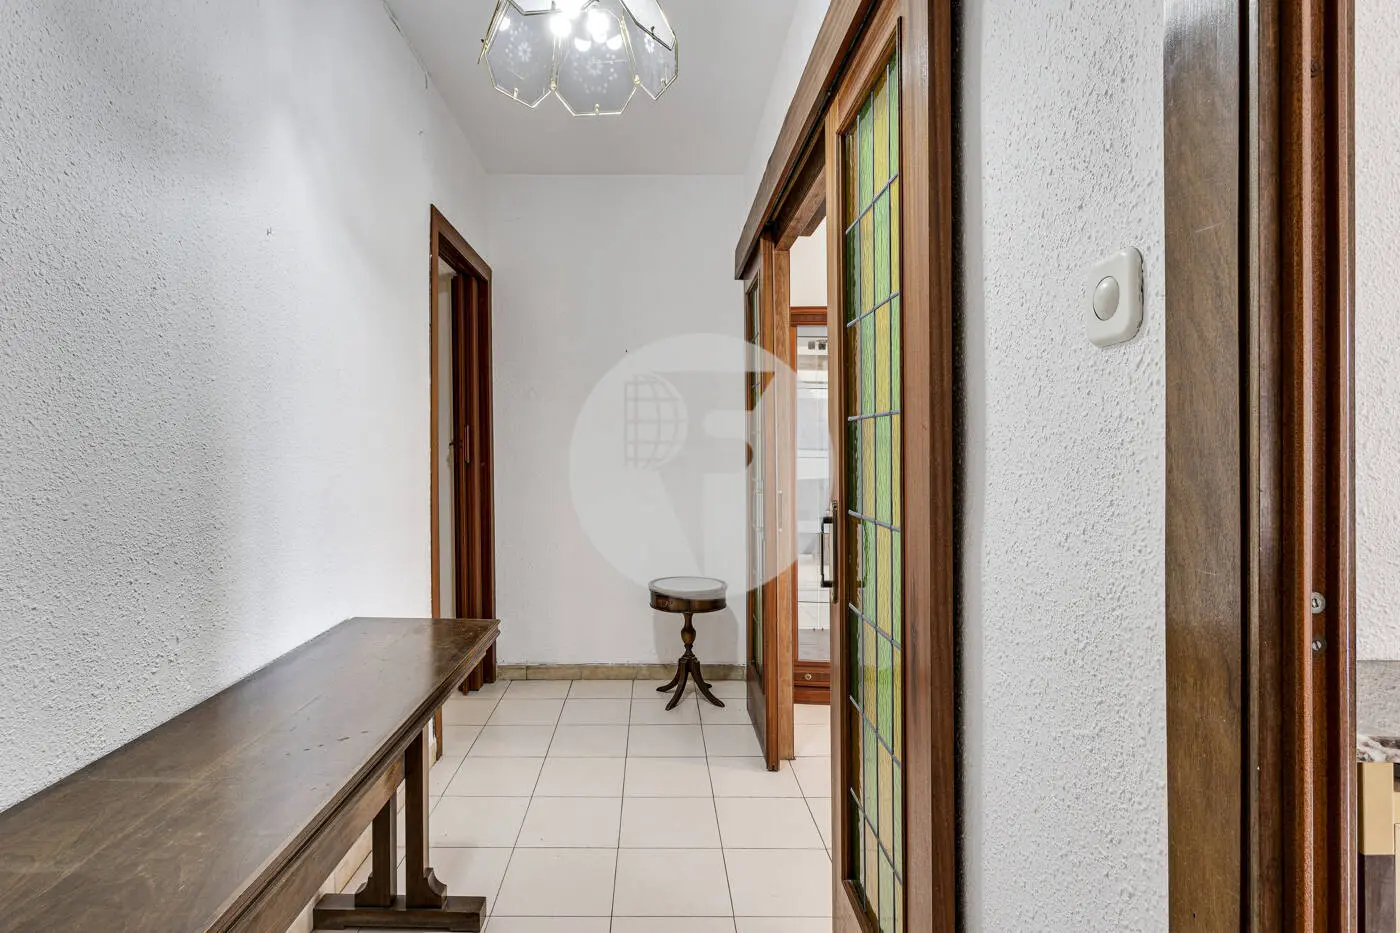 3-bedroom apartment located in the Nova Esquerra de l'Eixample neighborhood of Barcelona. 25